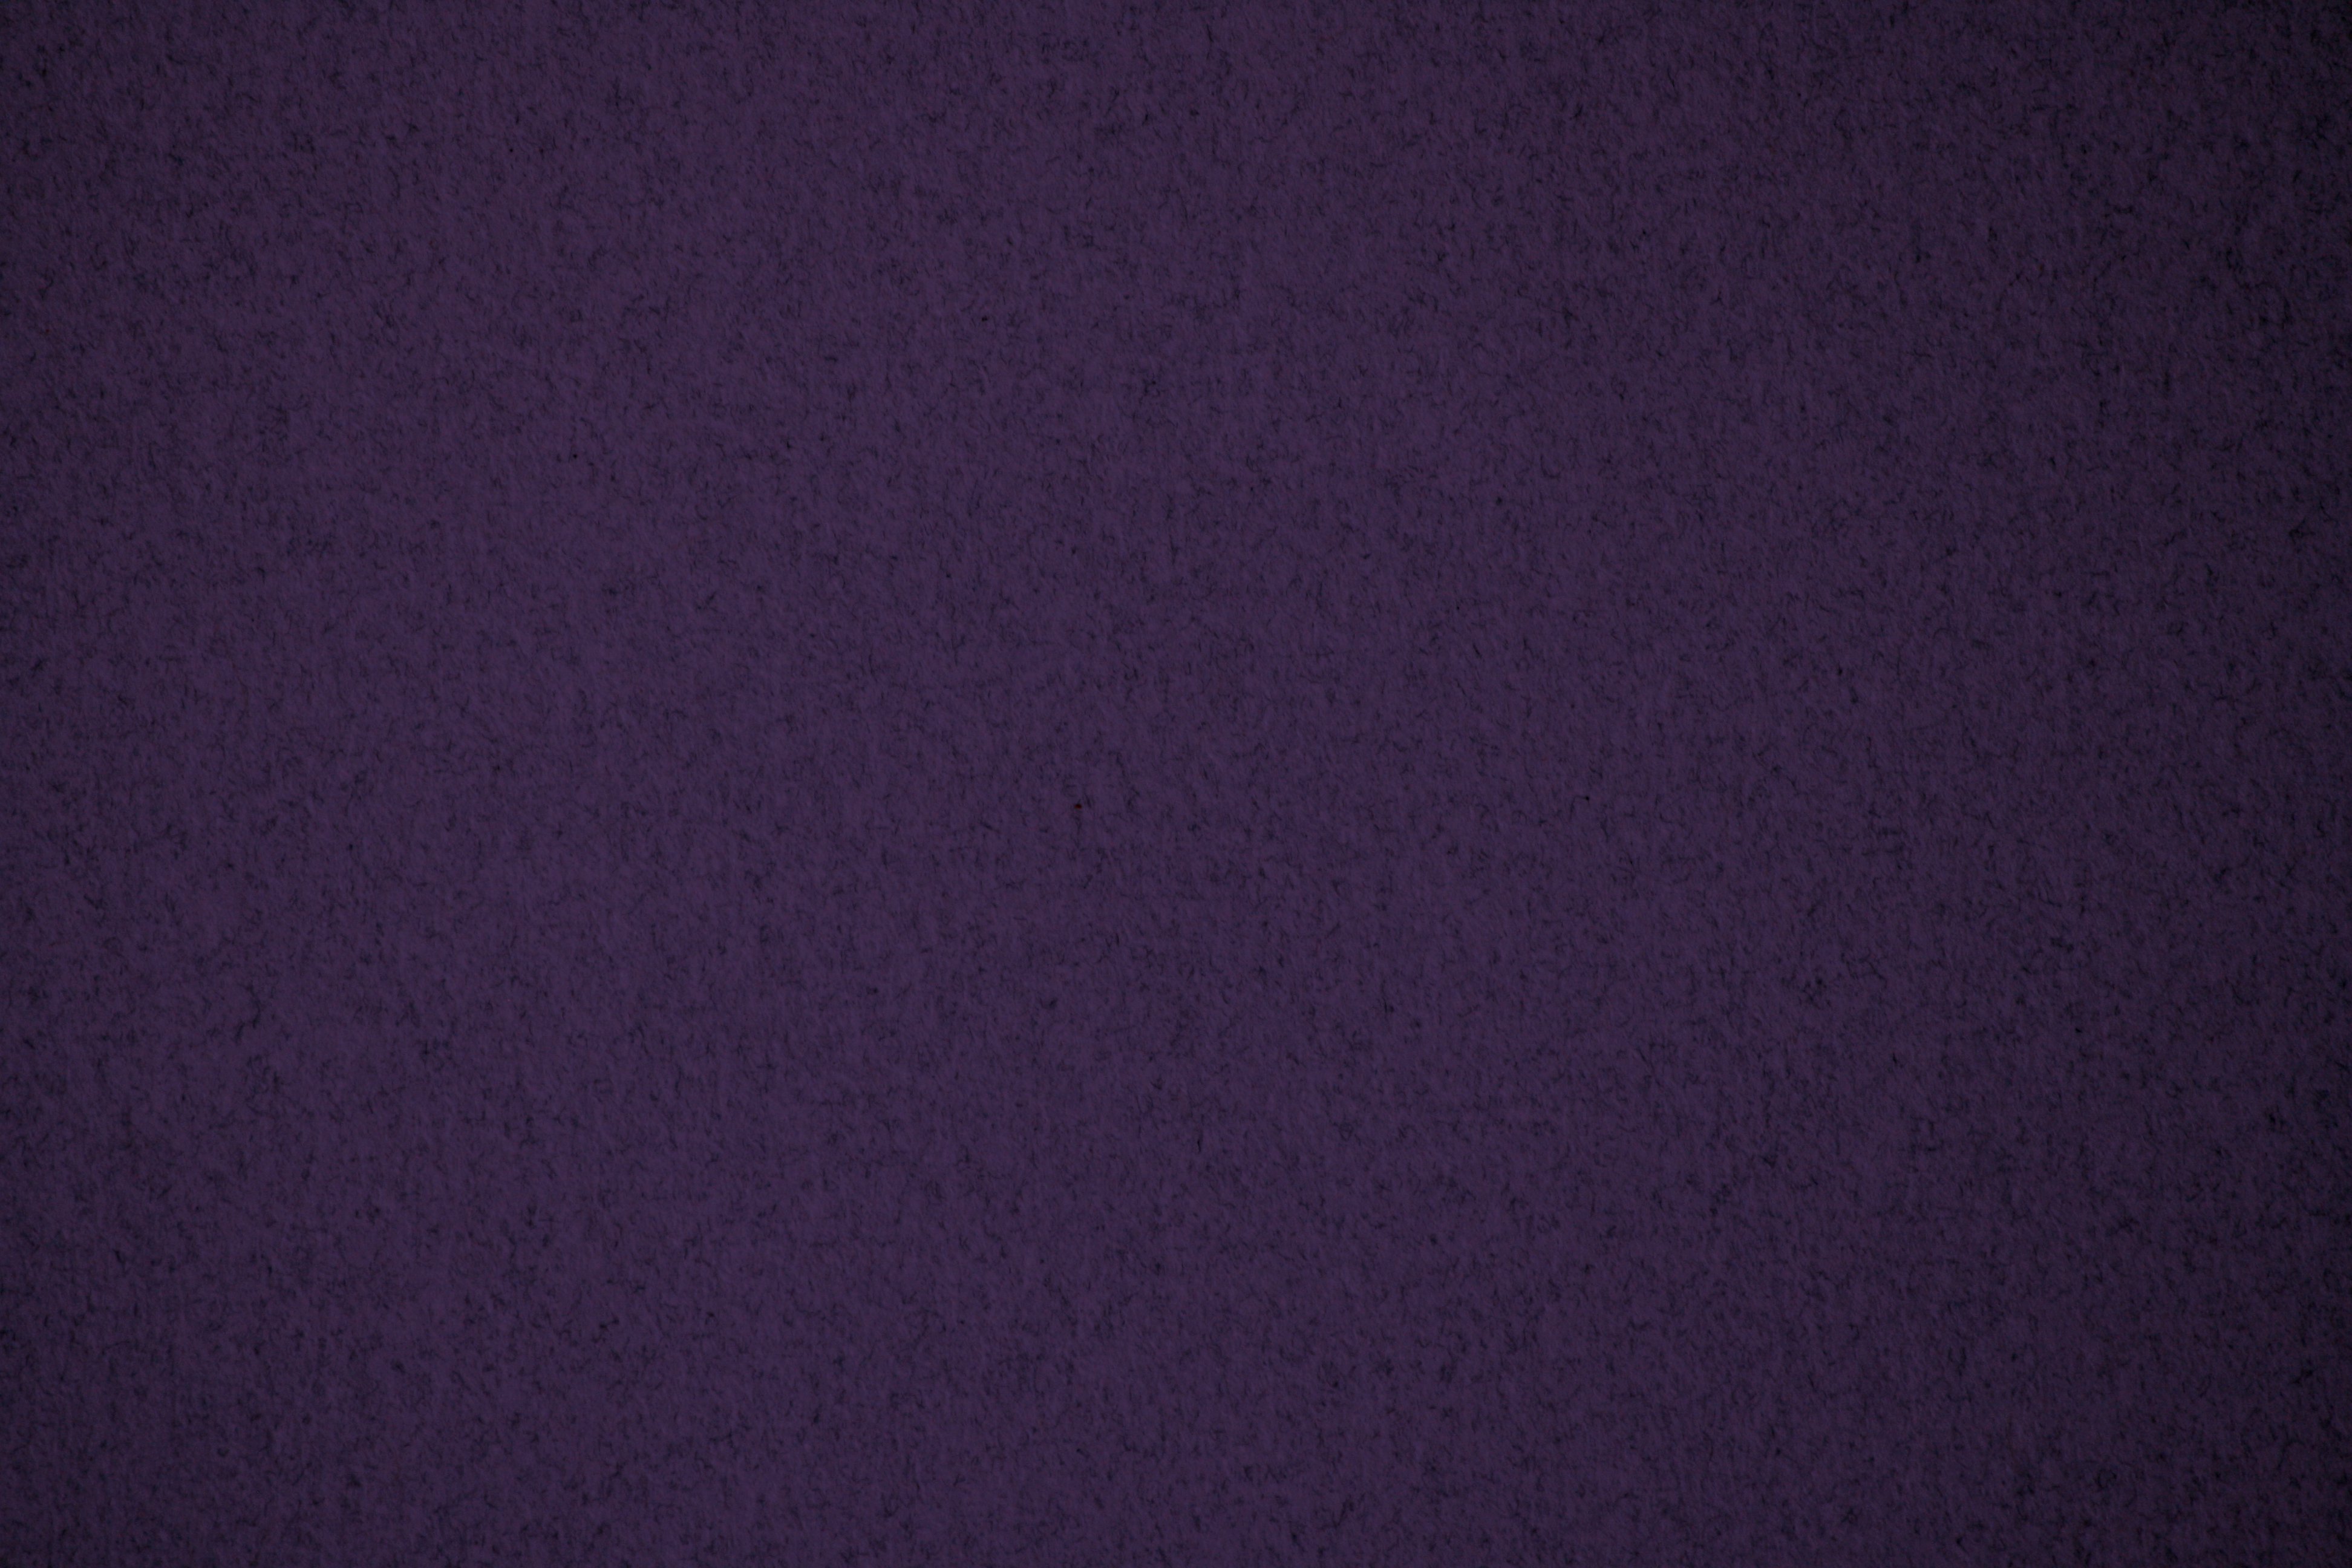 Dark Purple Background - Wisc-Online OER